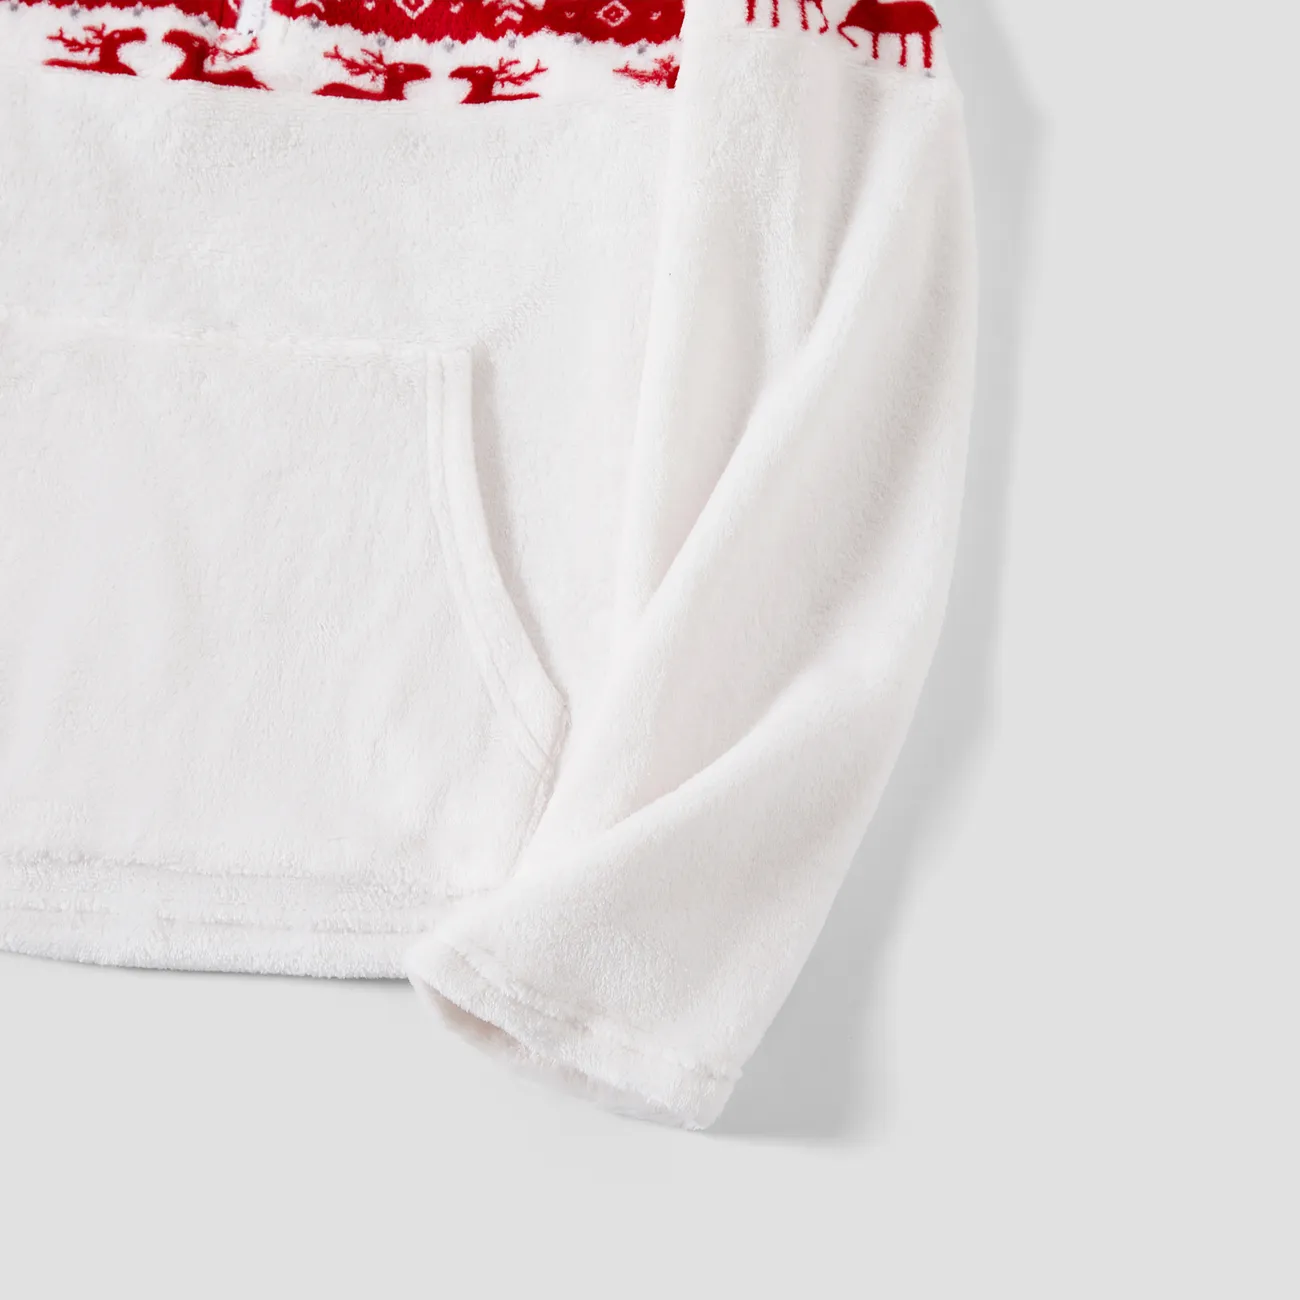 Christmas Family Matching Reindeer Print Stand Collar Fleece Sweatshirts Tops REDWHITE big image 1